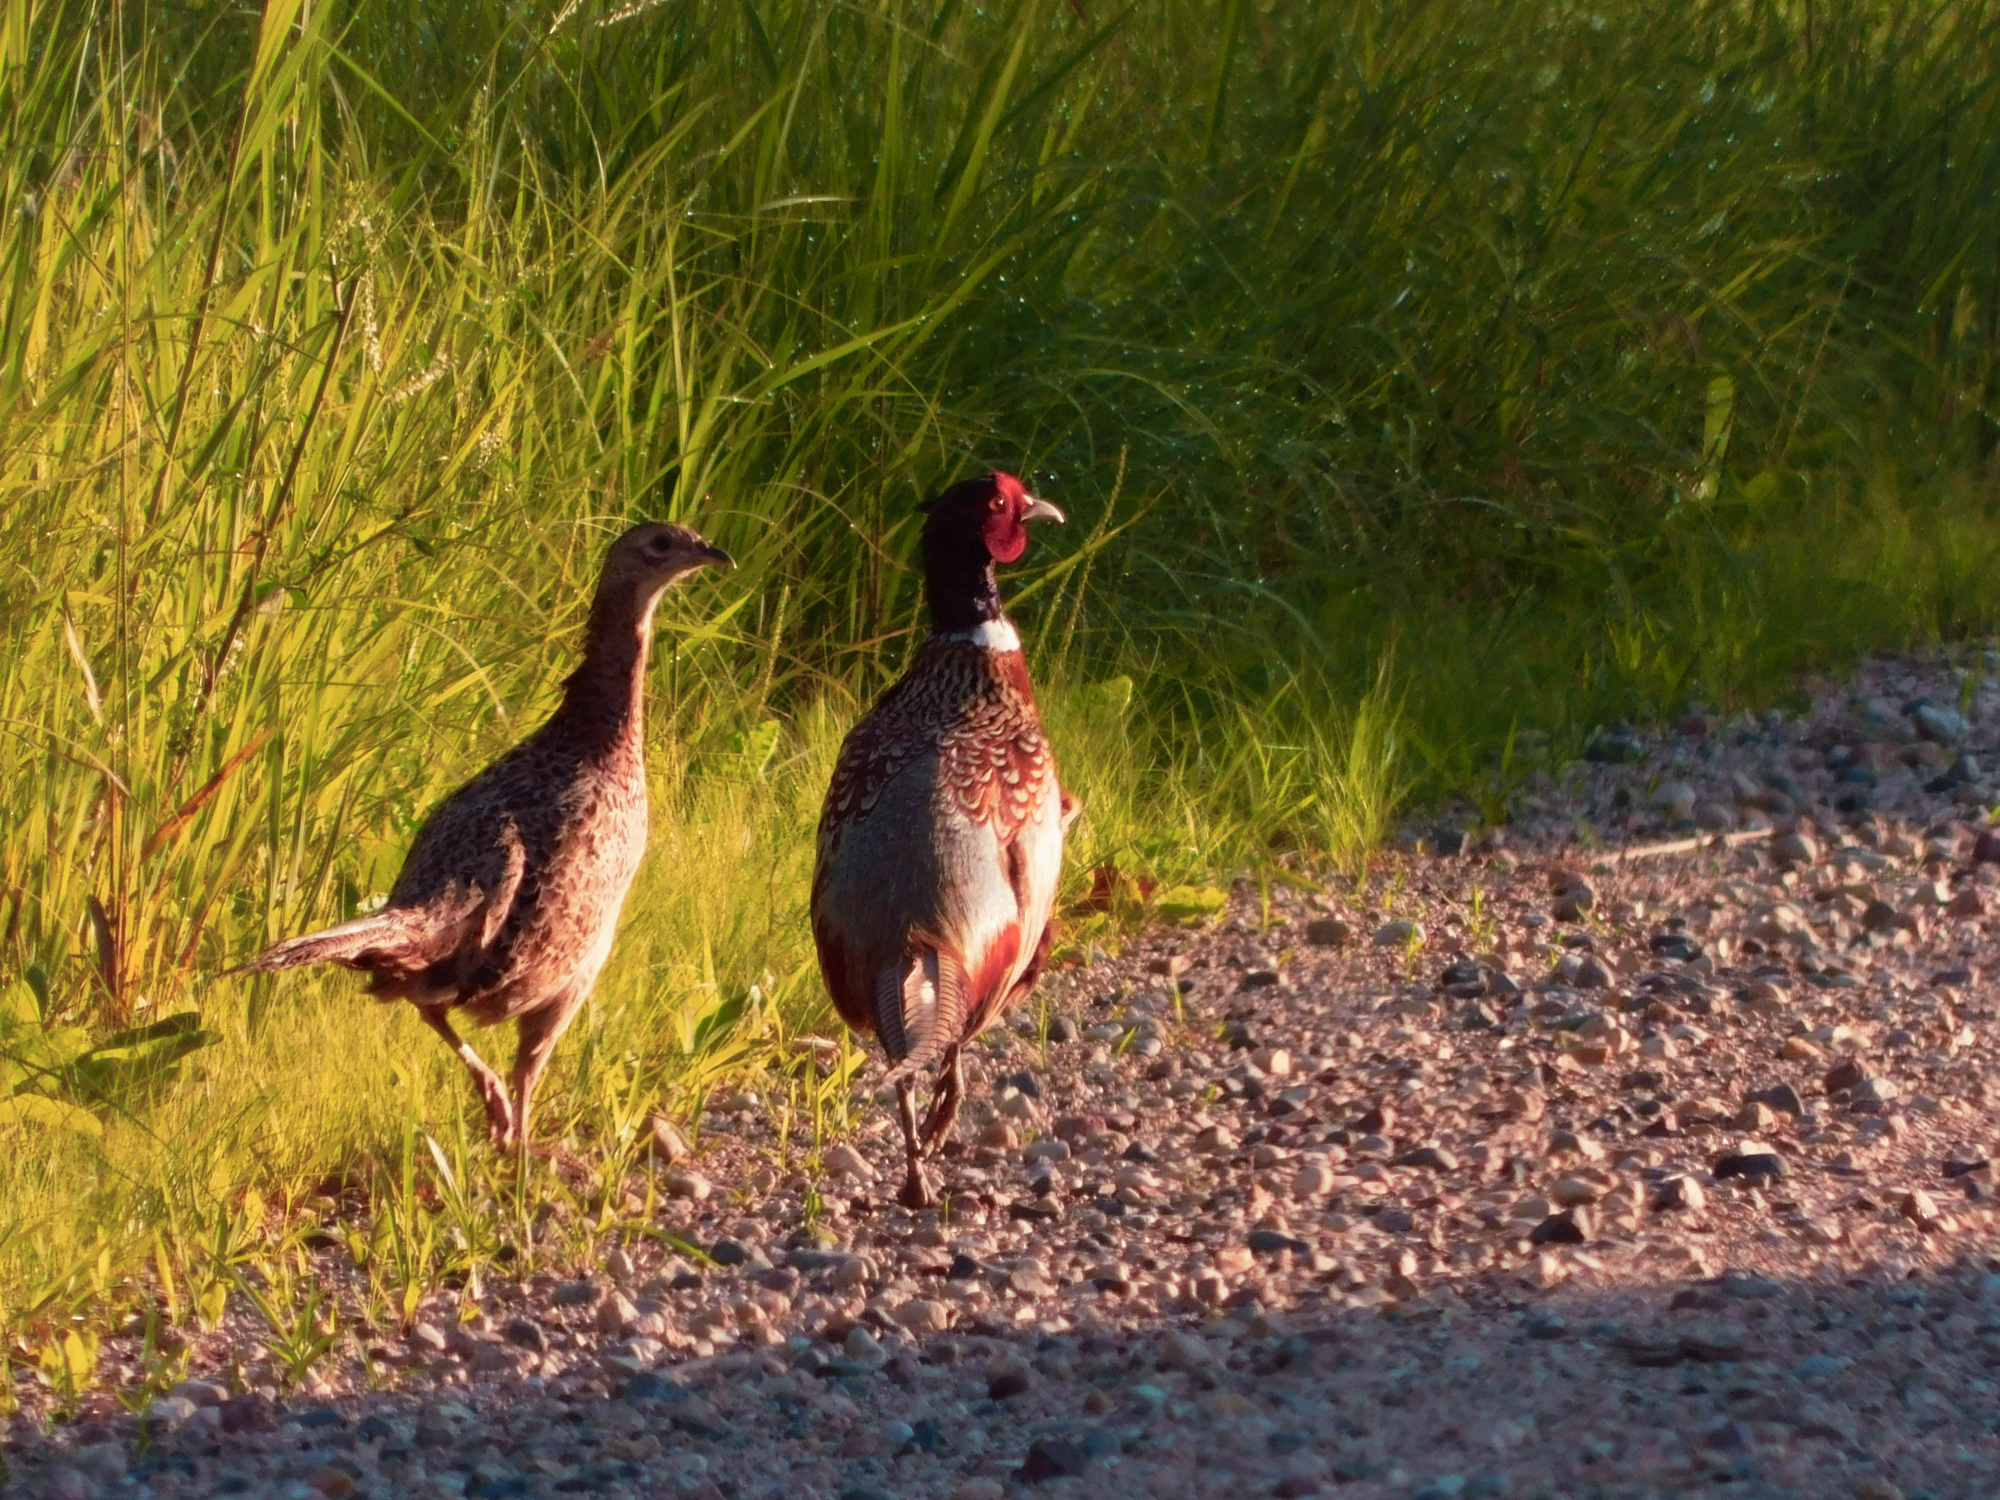 Two ringneck pheasants near some roadside vegetation.